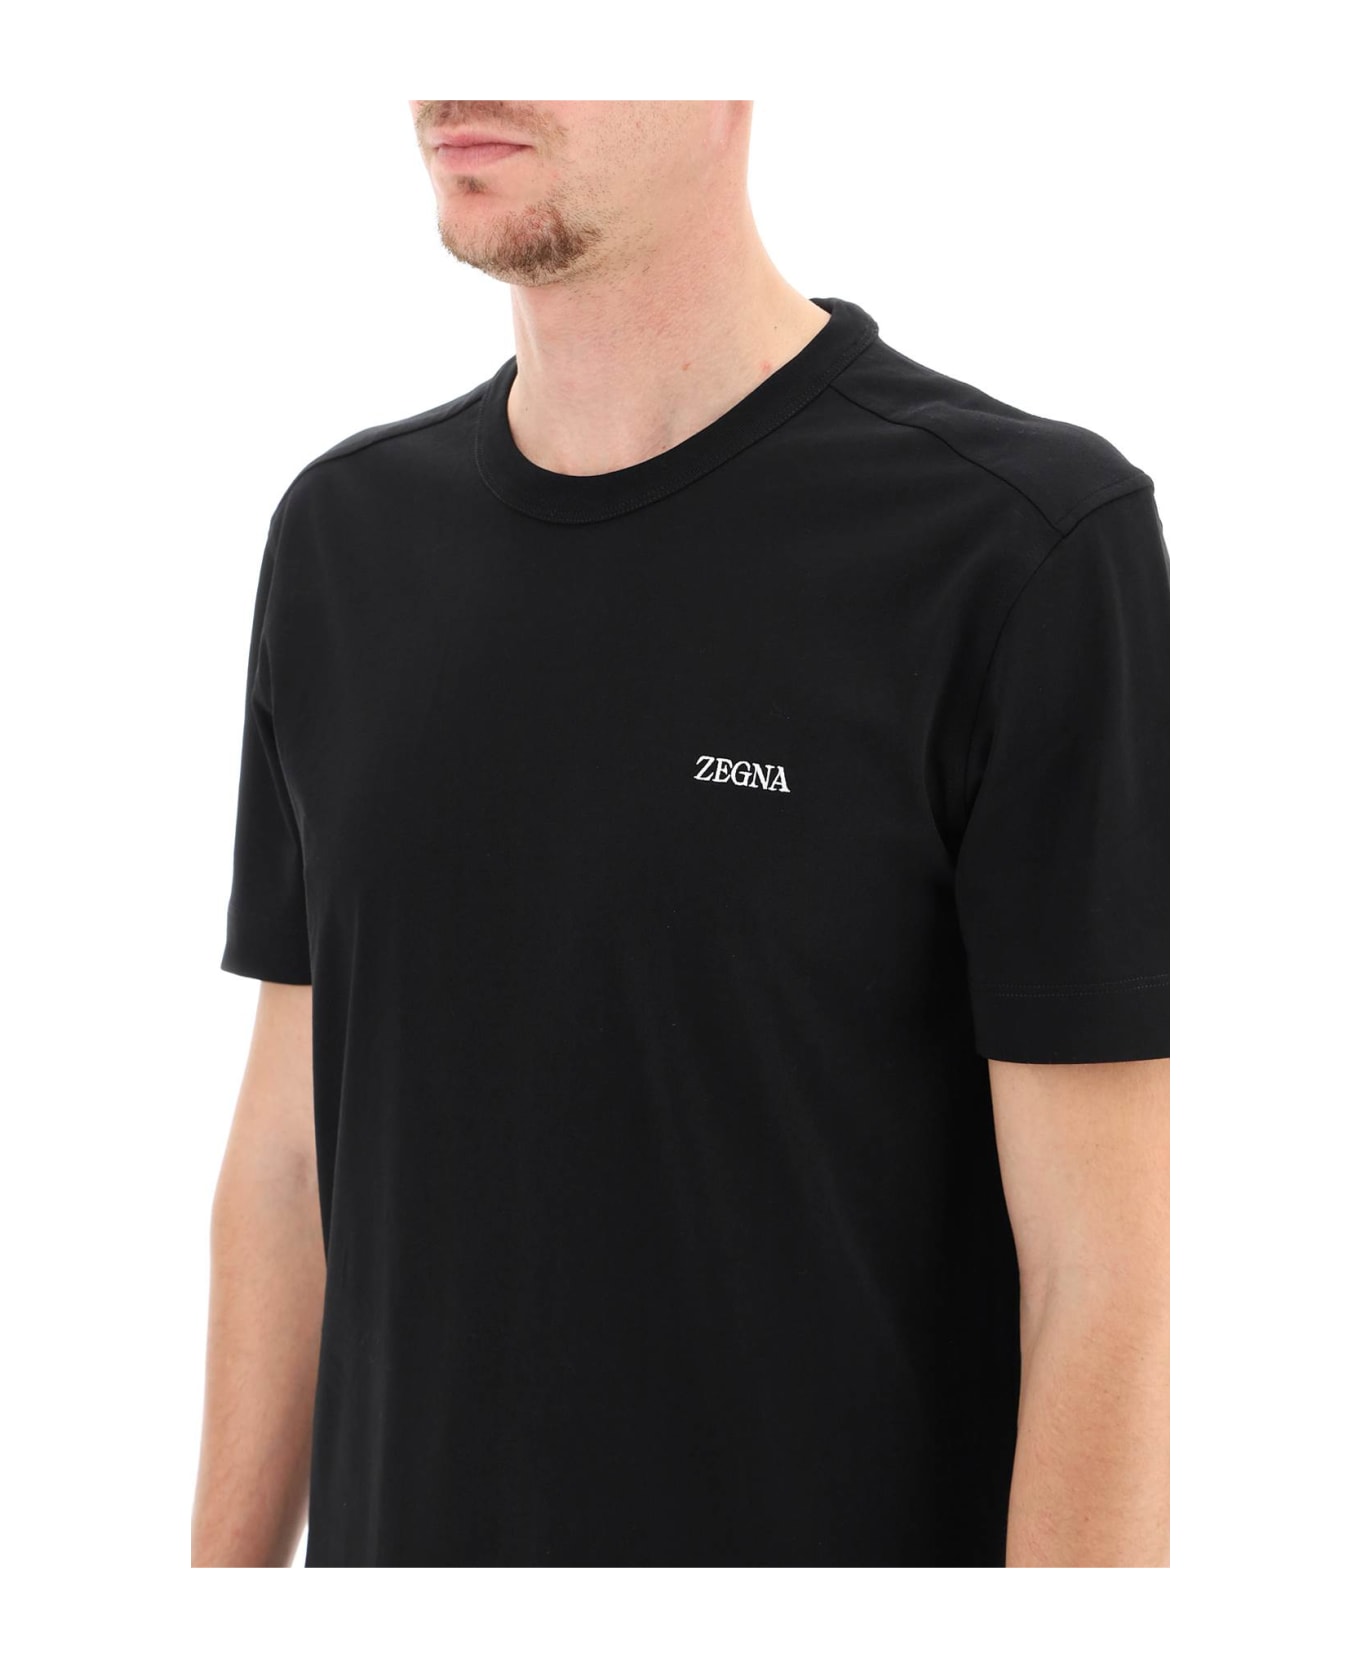 Zegna Logo T-shirt シャツ